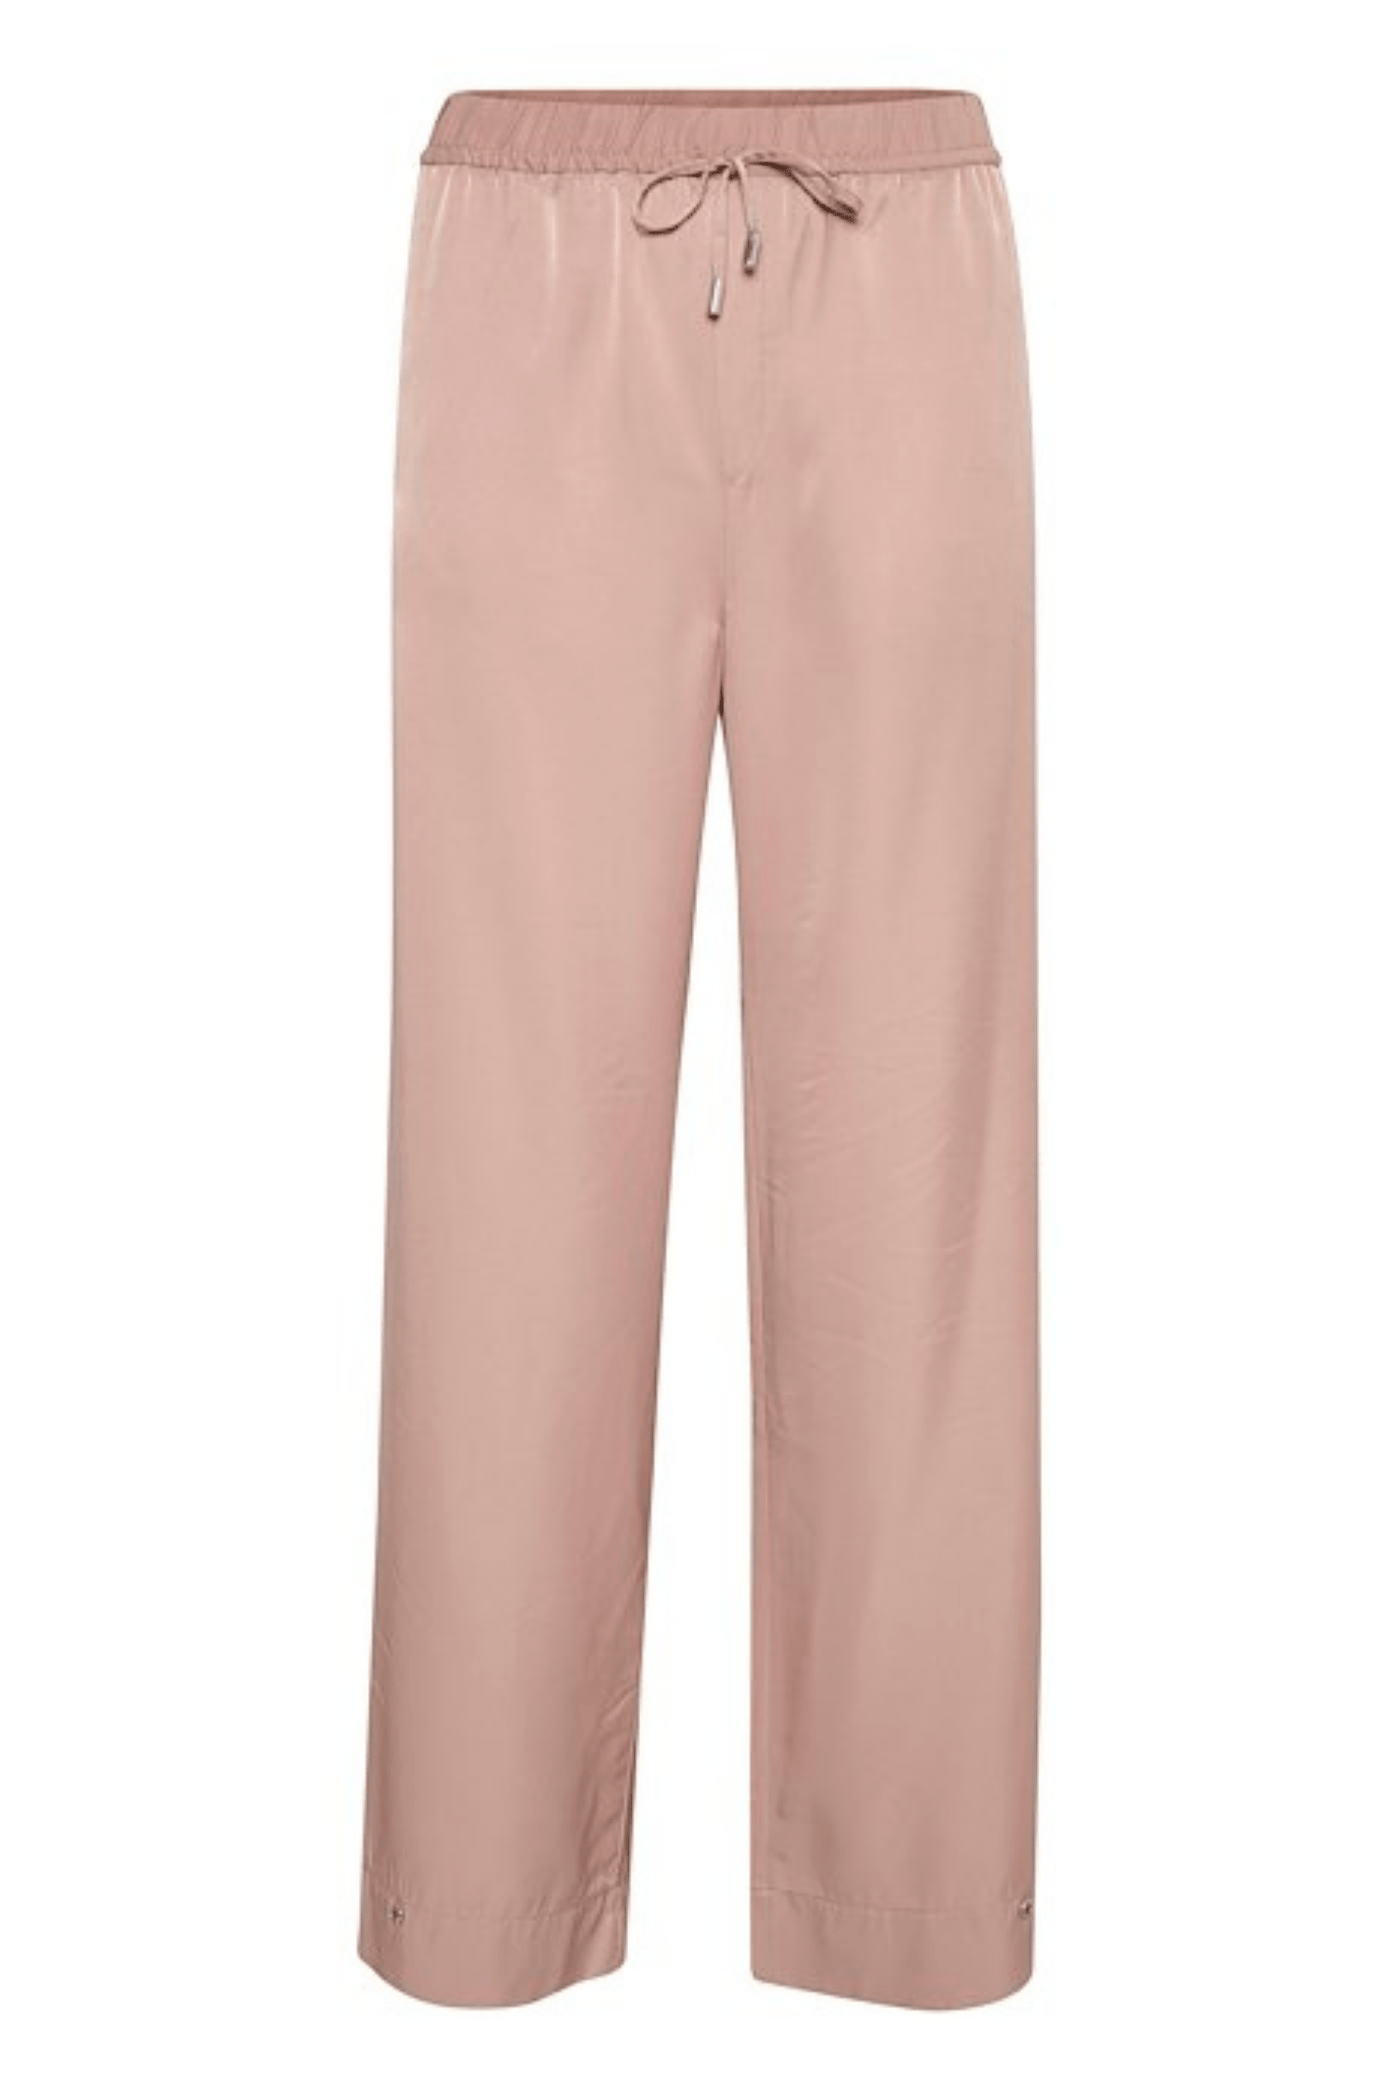 InWear Kellie Blush Pink Trousers - Jezabel Boutique